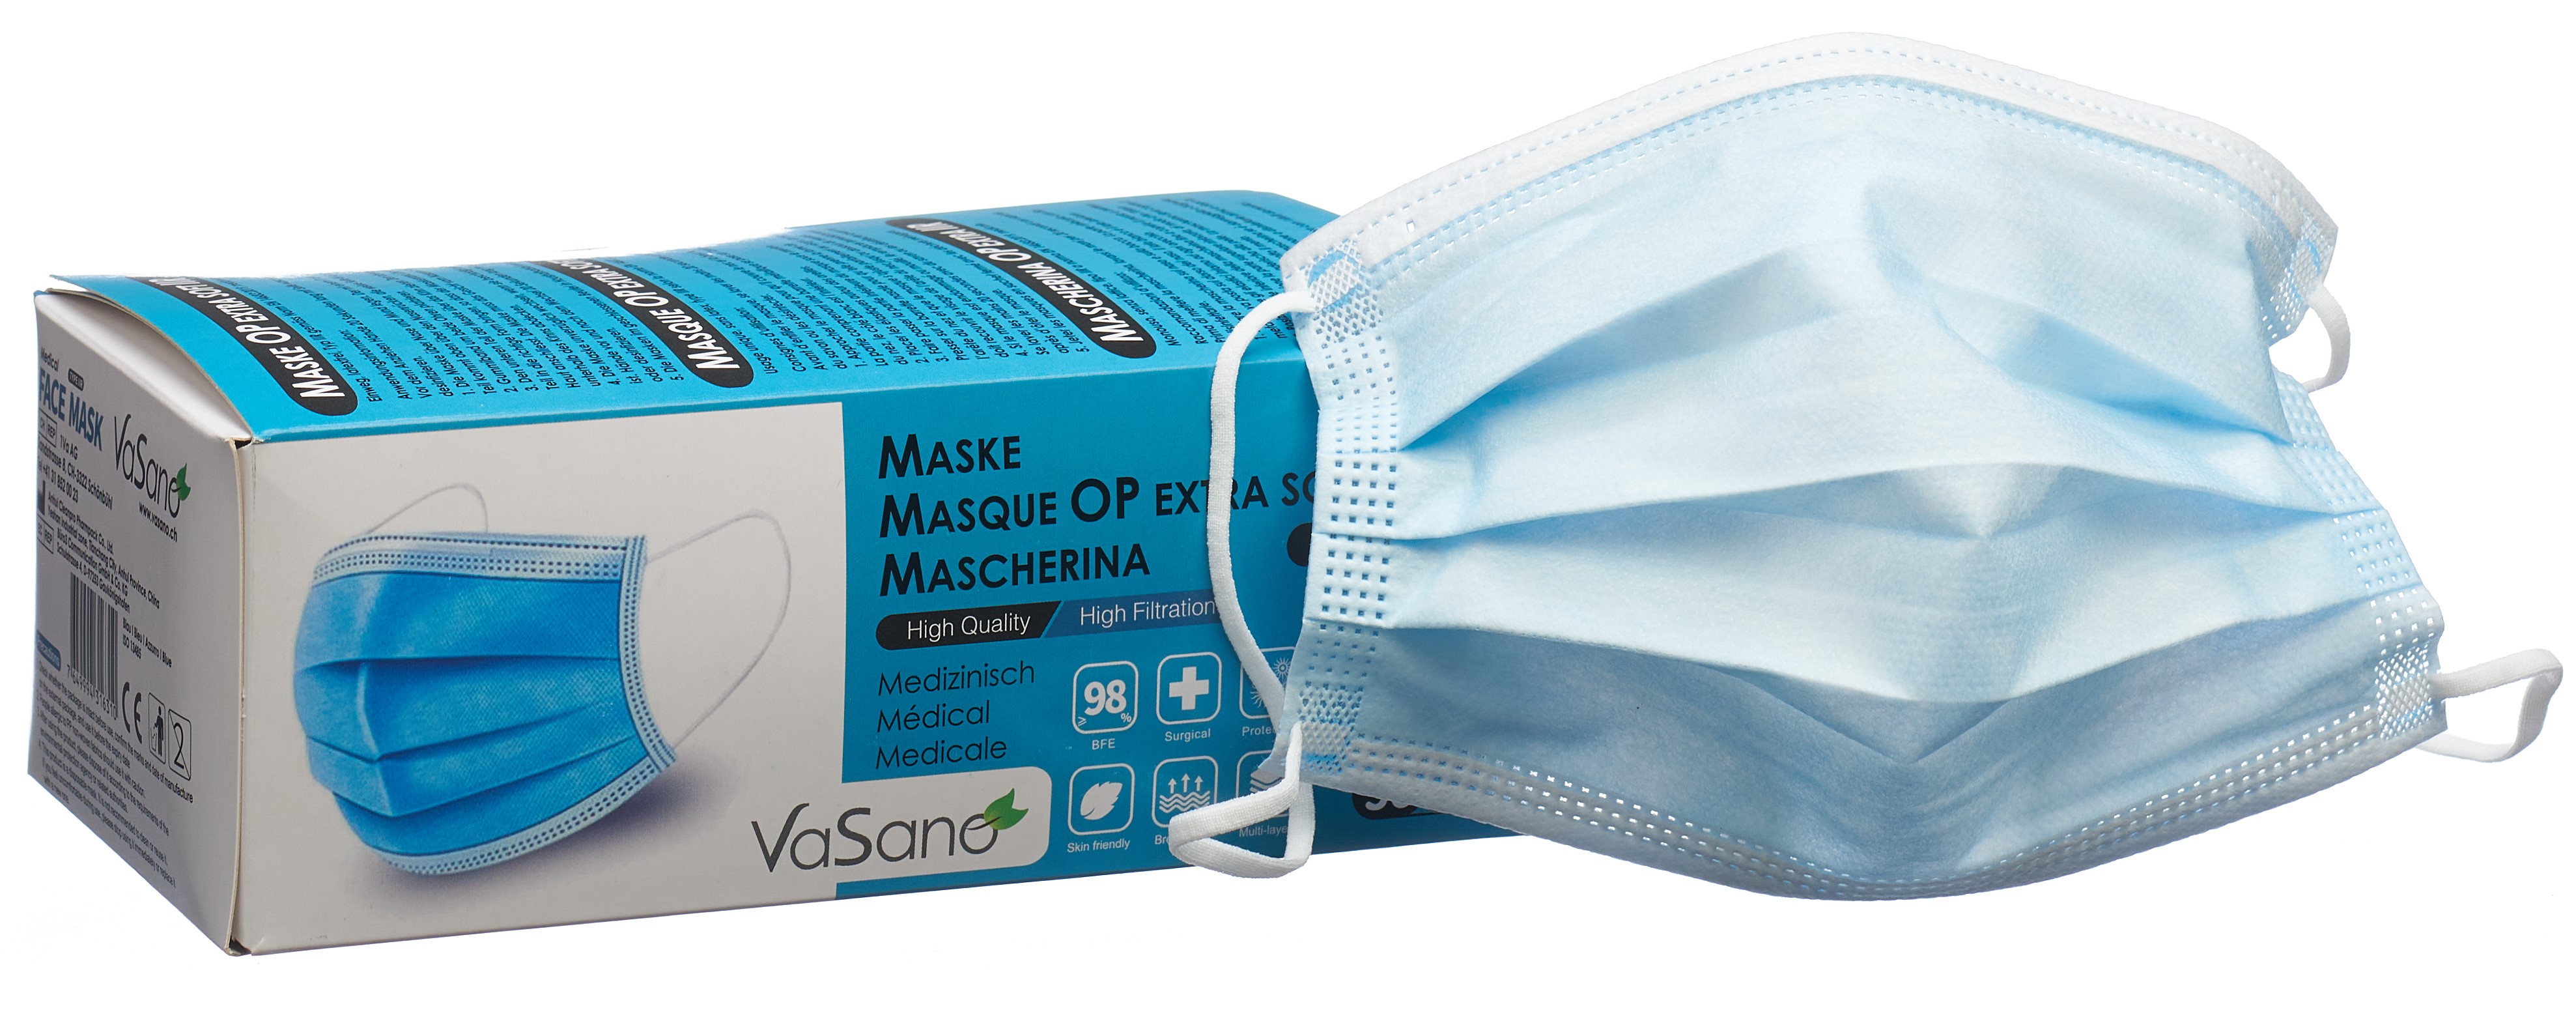 VaSano OP Maske extra soft Typ IIR blau